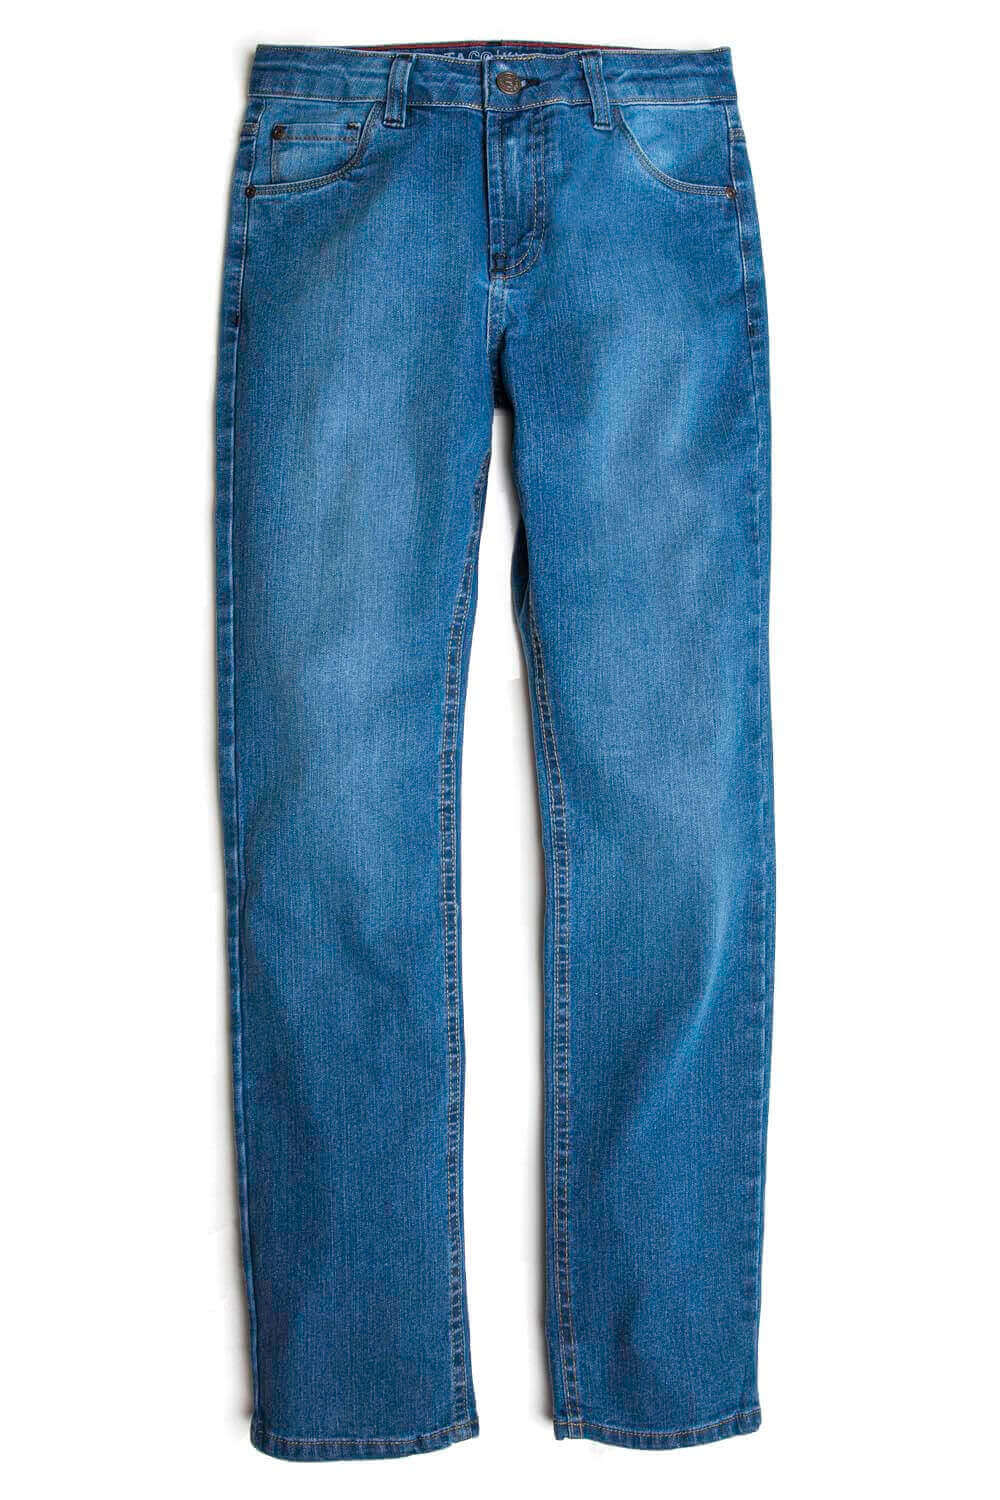 calças jeans masculina infantil